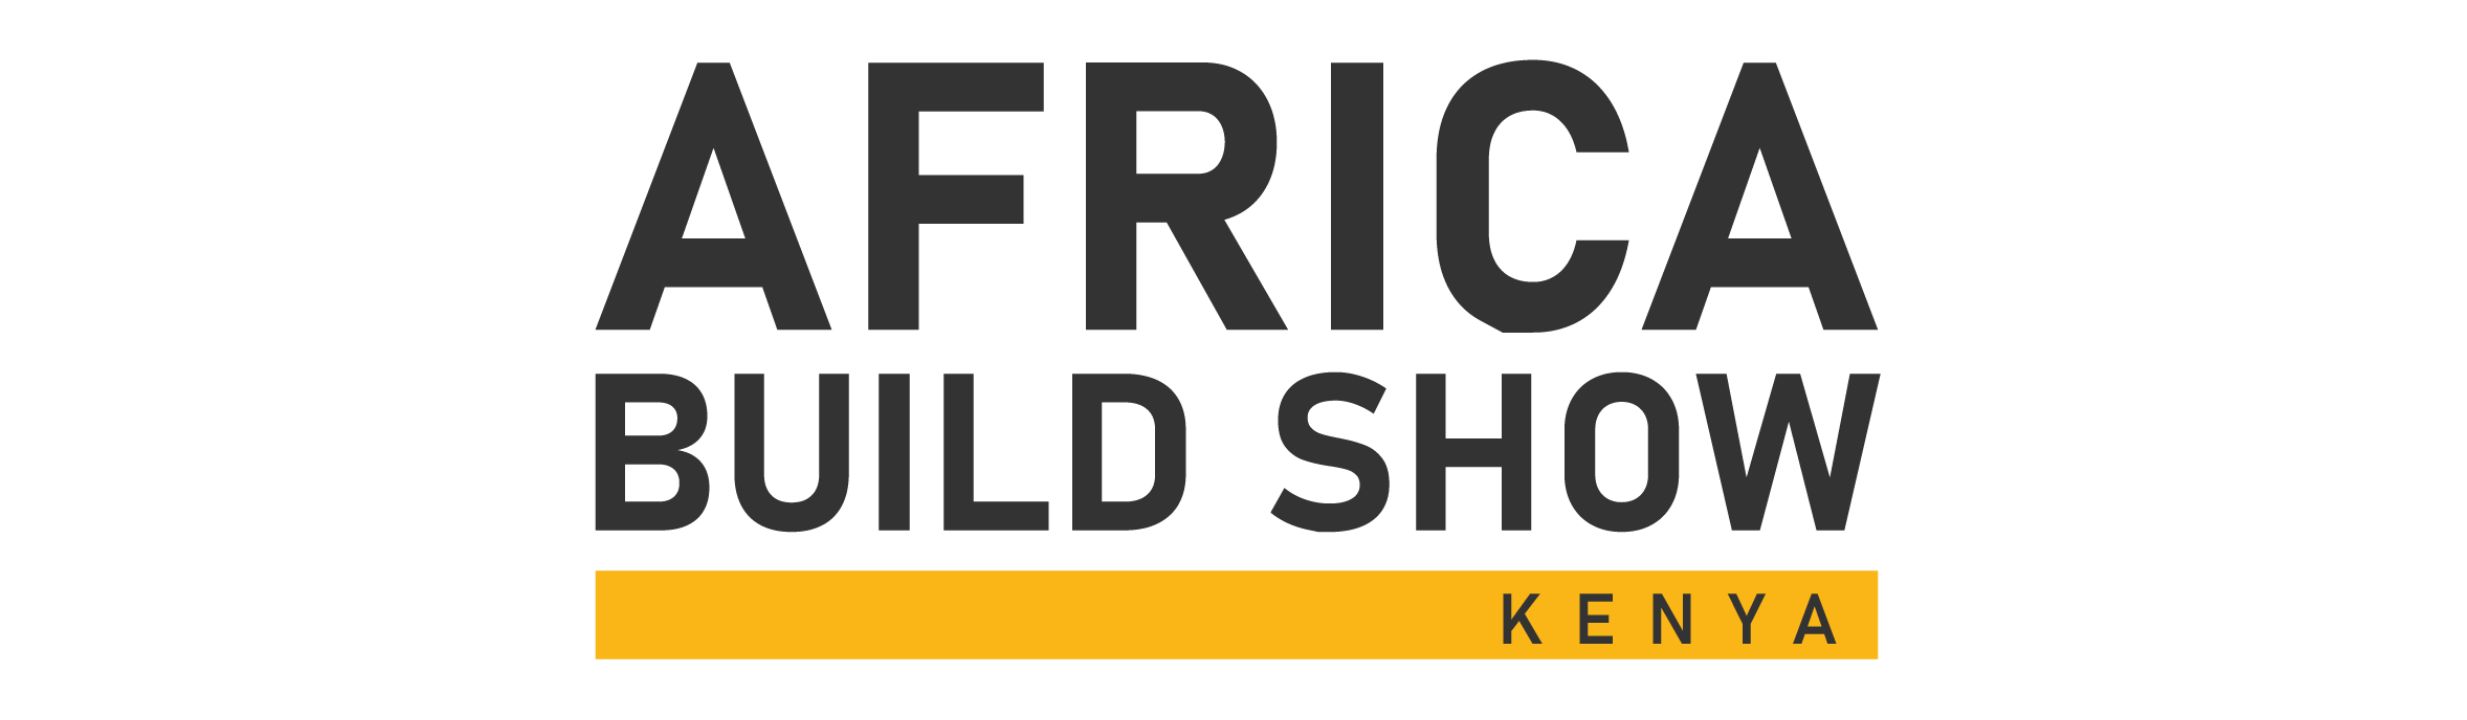 Africa Build Show Kenya, Nairobi, Kenya